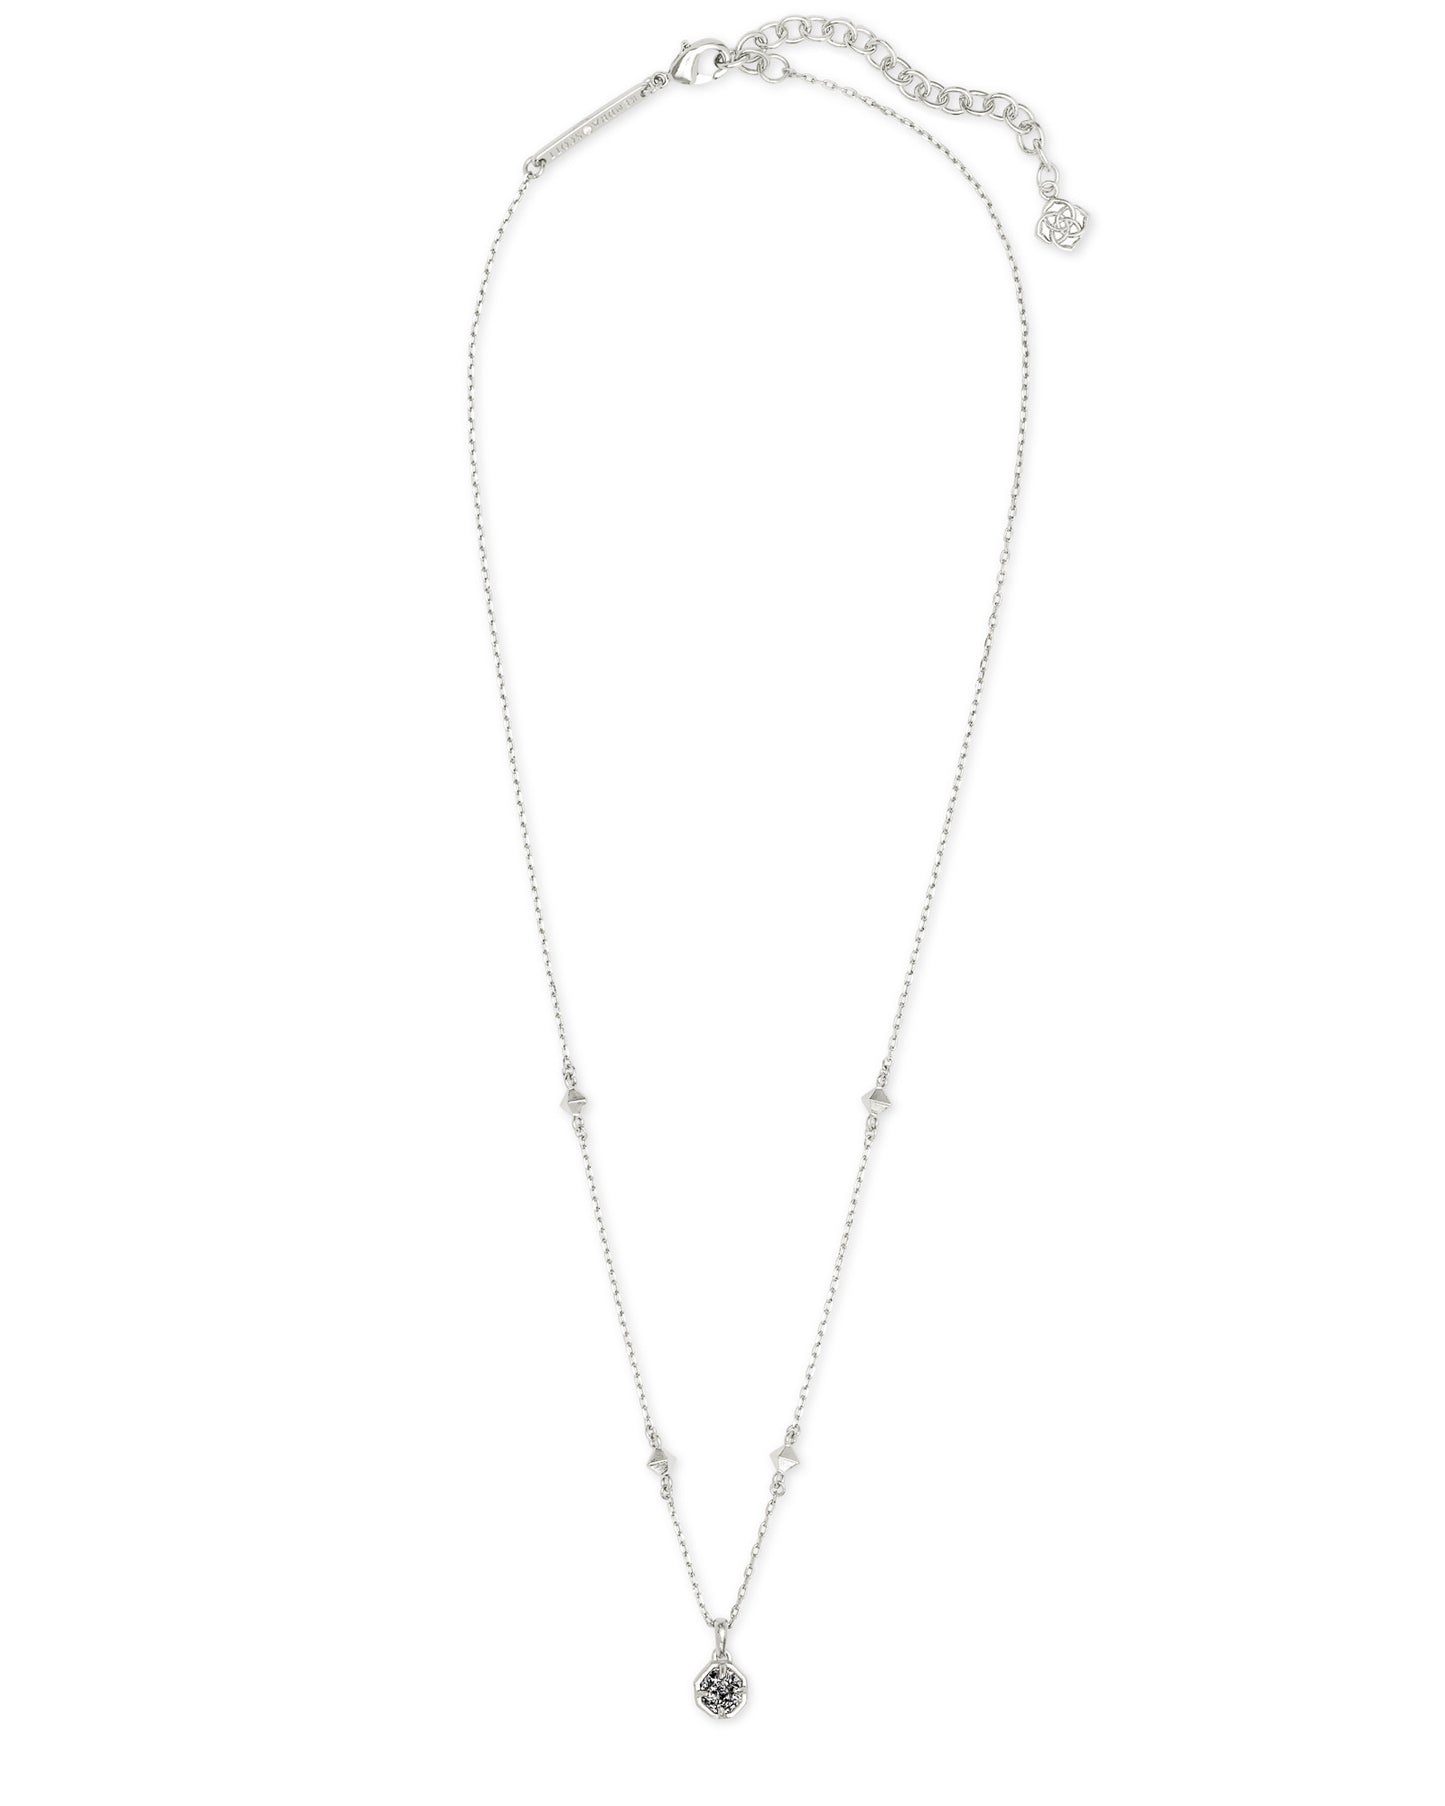 Kendra Scott Nola Pendant Necklace Rhodium Platinum Drusy-Necklaces-Kendra Scott-N1341RHD-The Twisted Chandelier